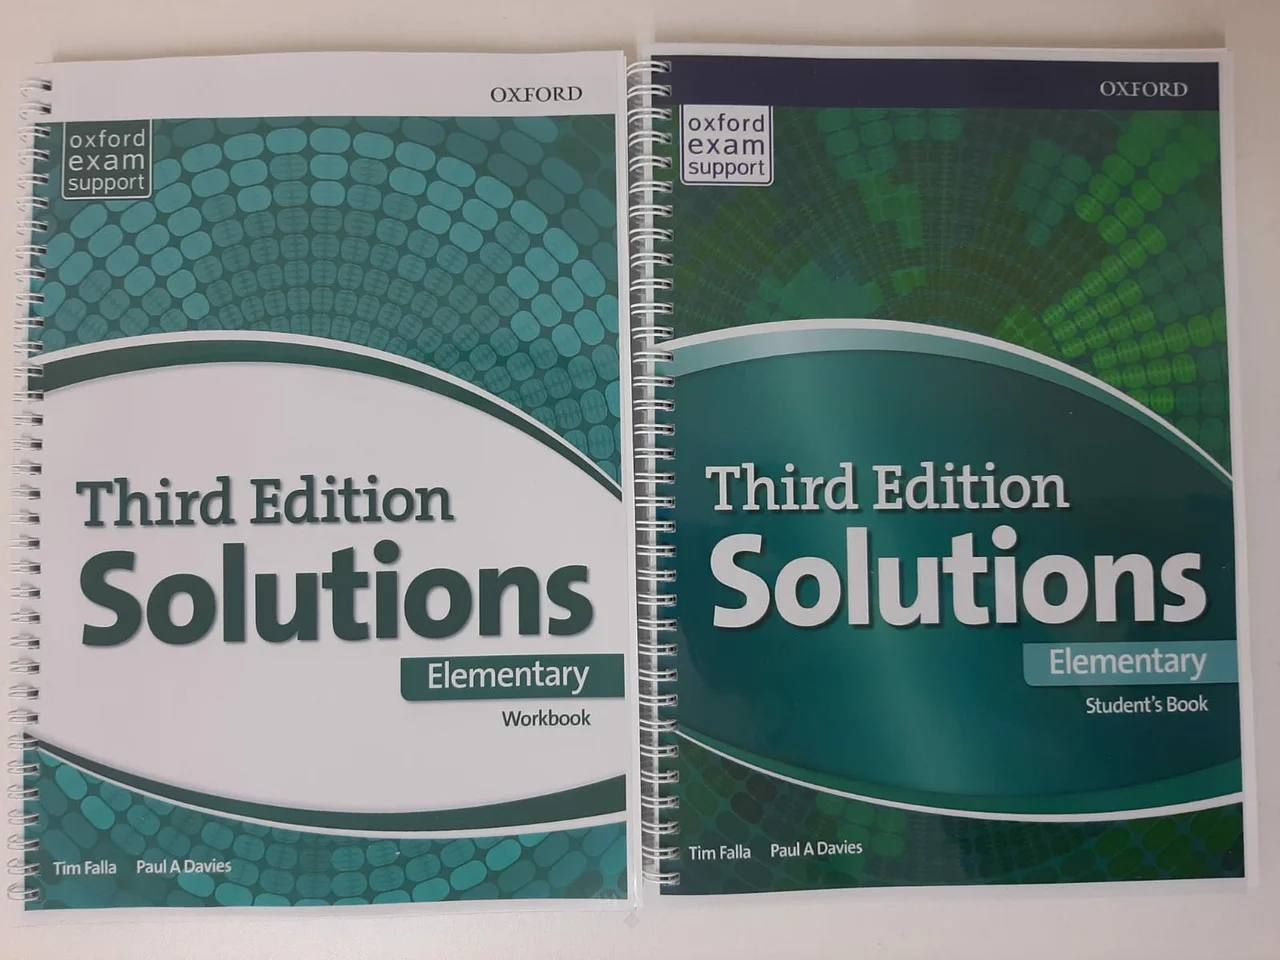 Solutions elementary book ответы. Solutions Elementary 3rd Edition. Solutions third Edition Elementary Tests. Solutions Elementary Green 3rd Edition exsom 3. Solutions Elementary 3rd Edition Tests 3.